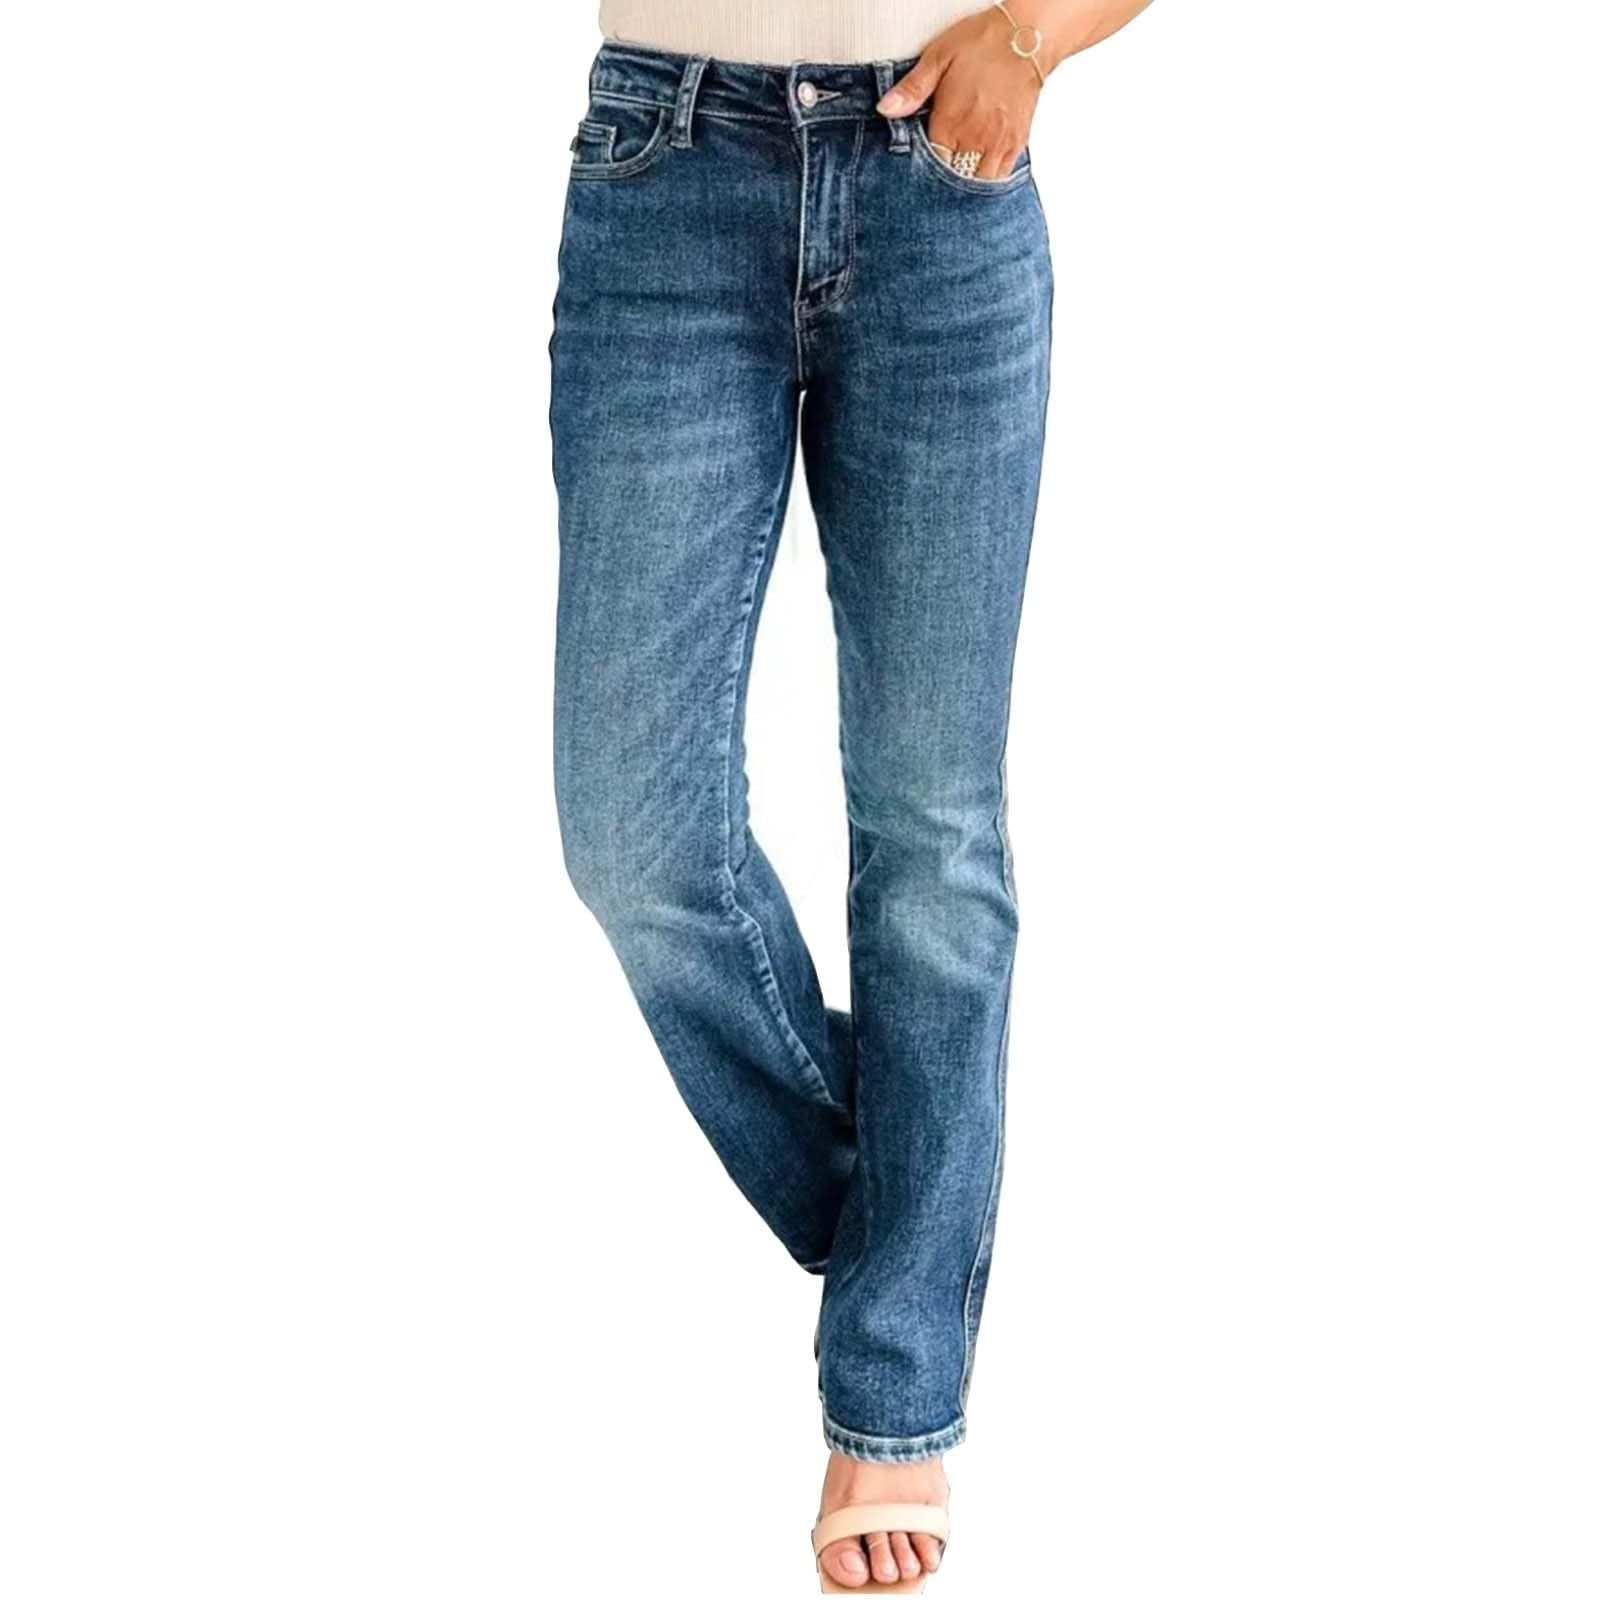 Ogiraw Pants for Women Jeans for Women Jeans for Women Trendy Women’S ...